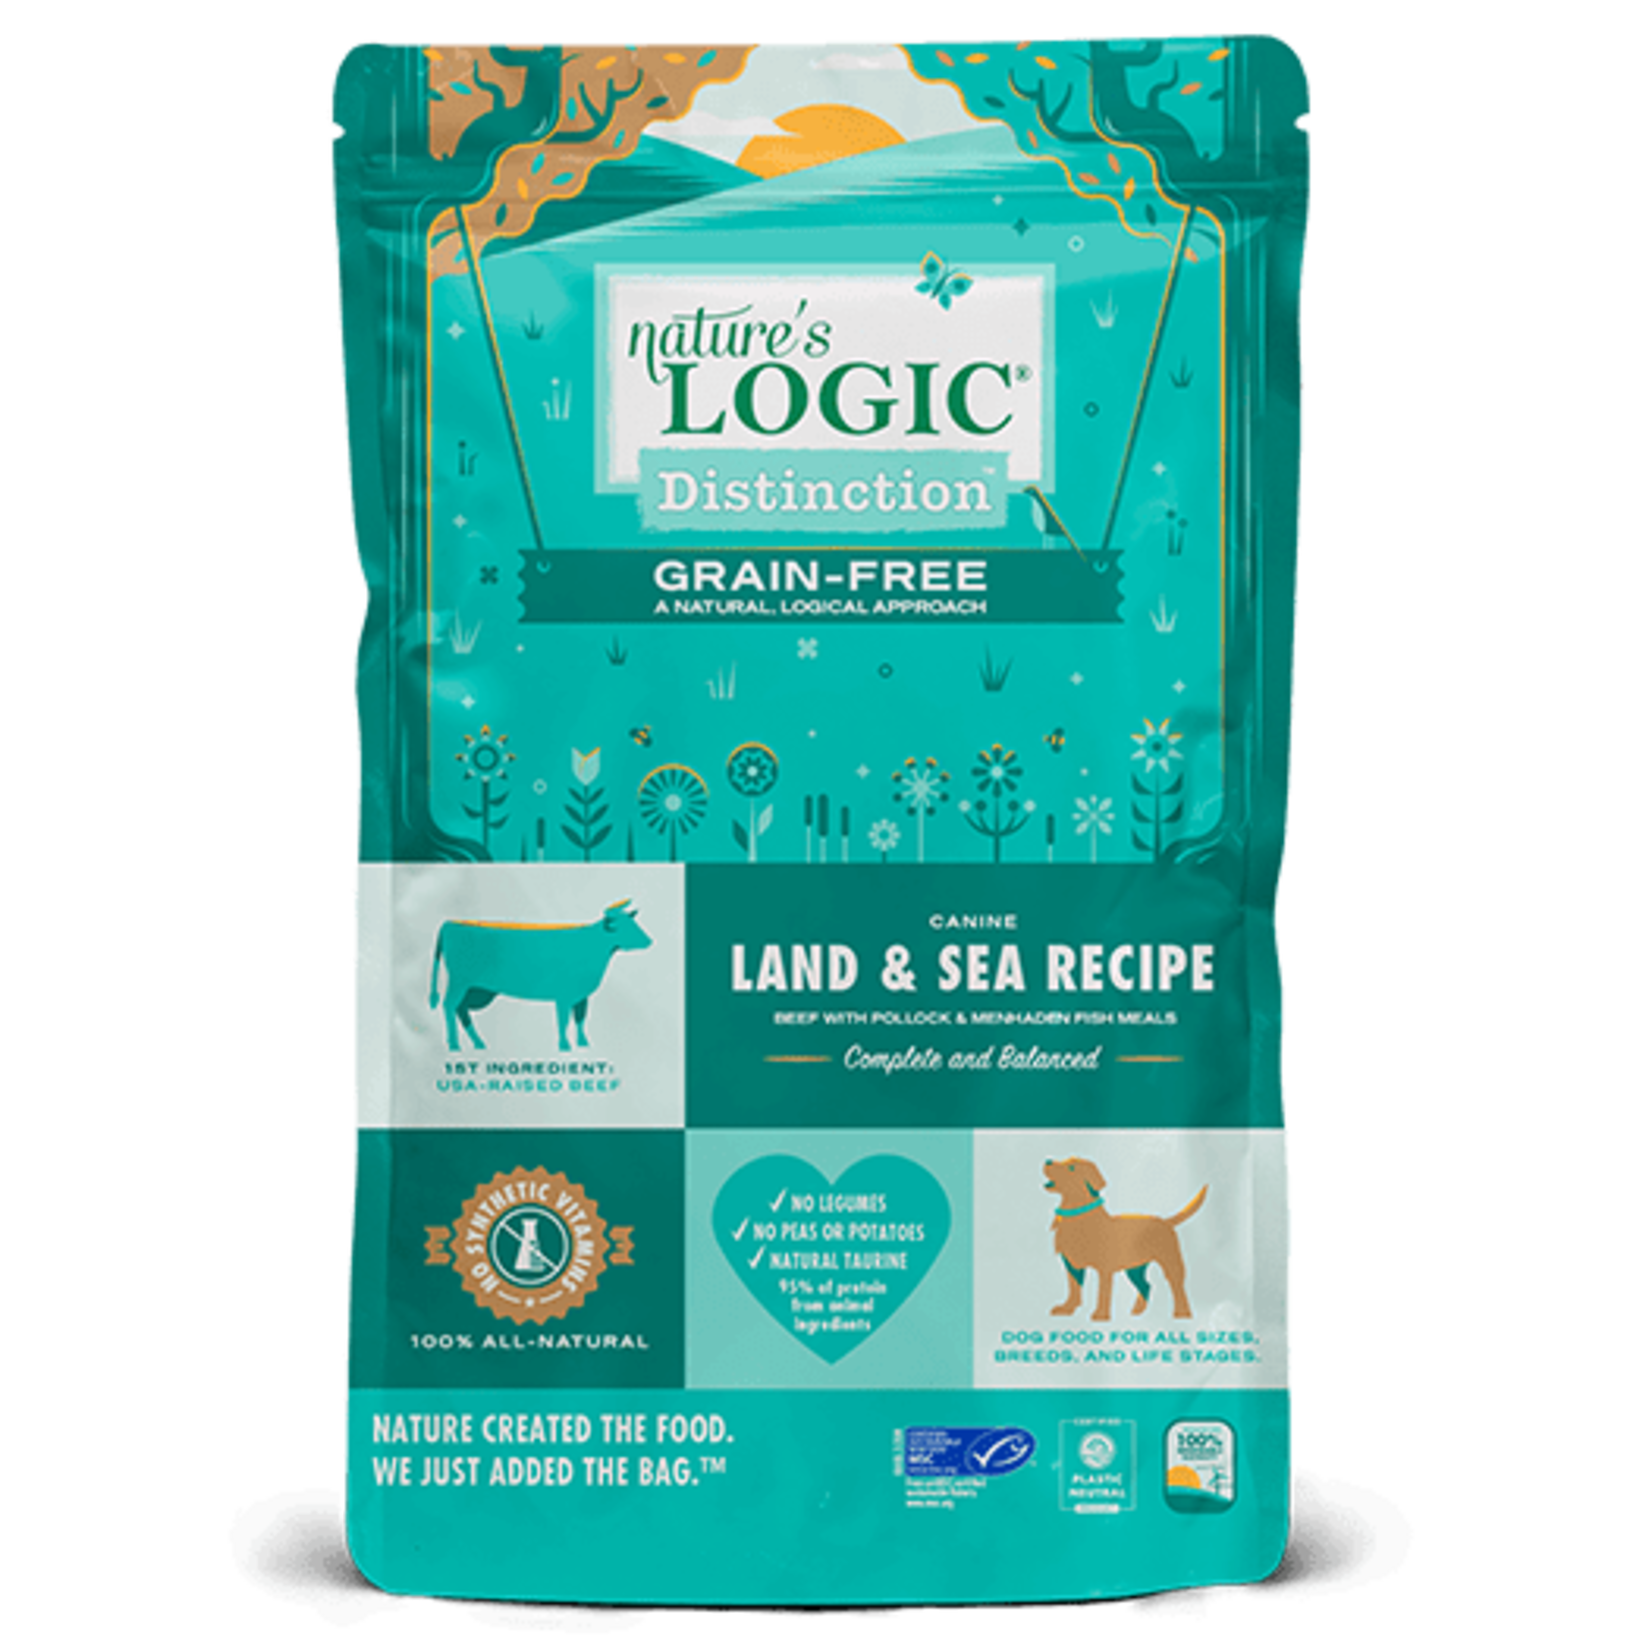 Nature's Logic Nature's Logic Distinction - Grain-Free Canine Land & Sea Recipe